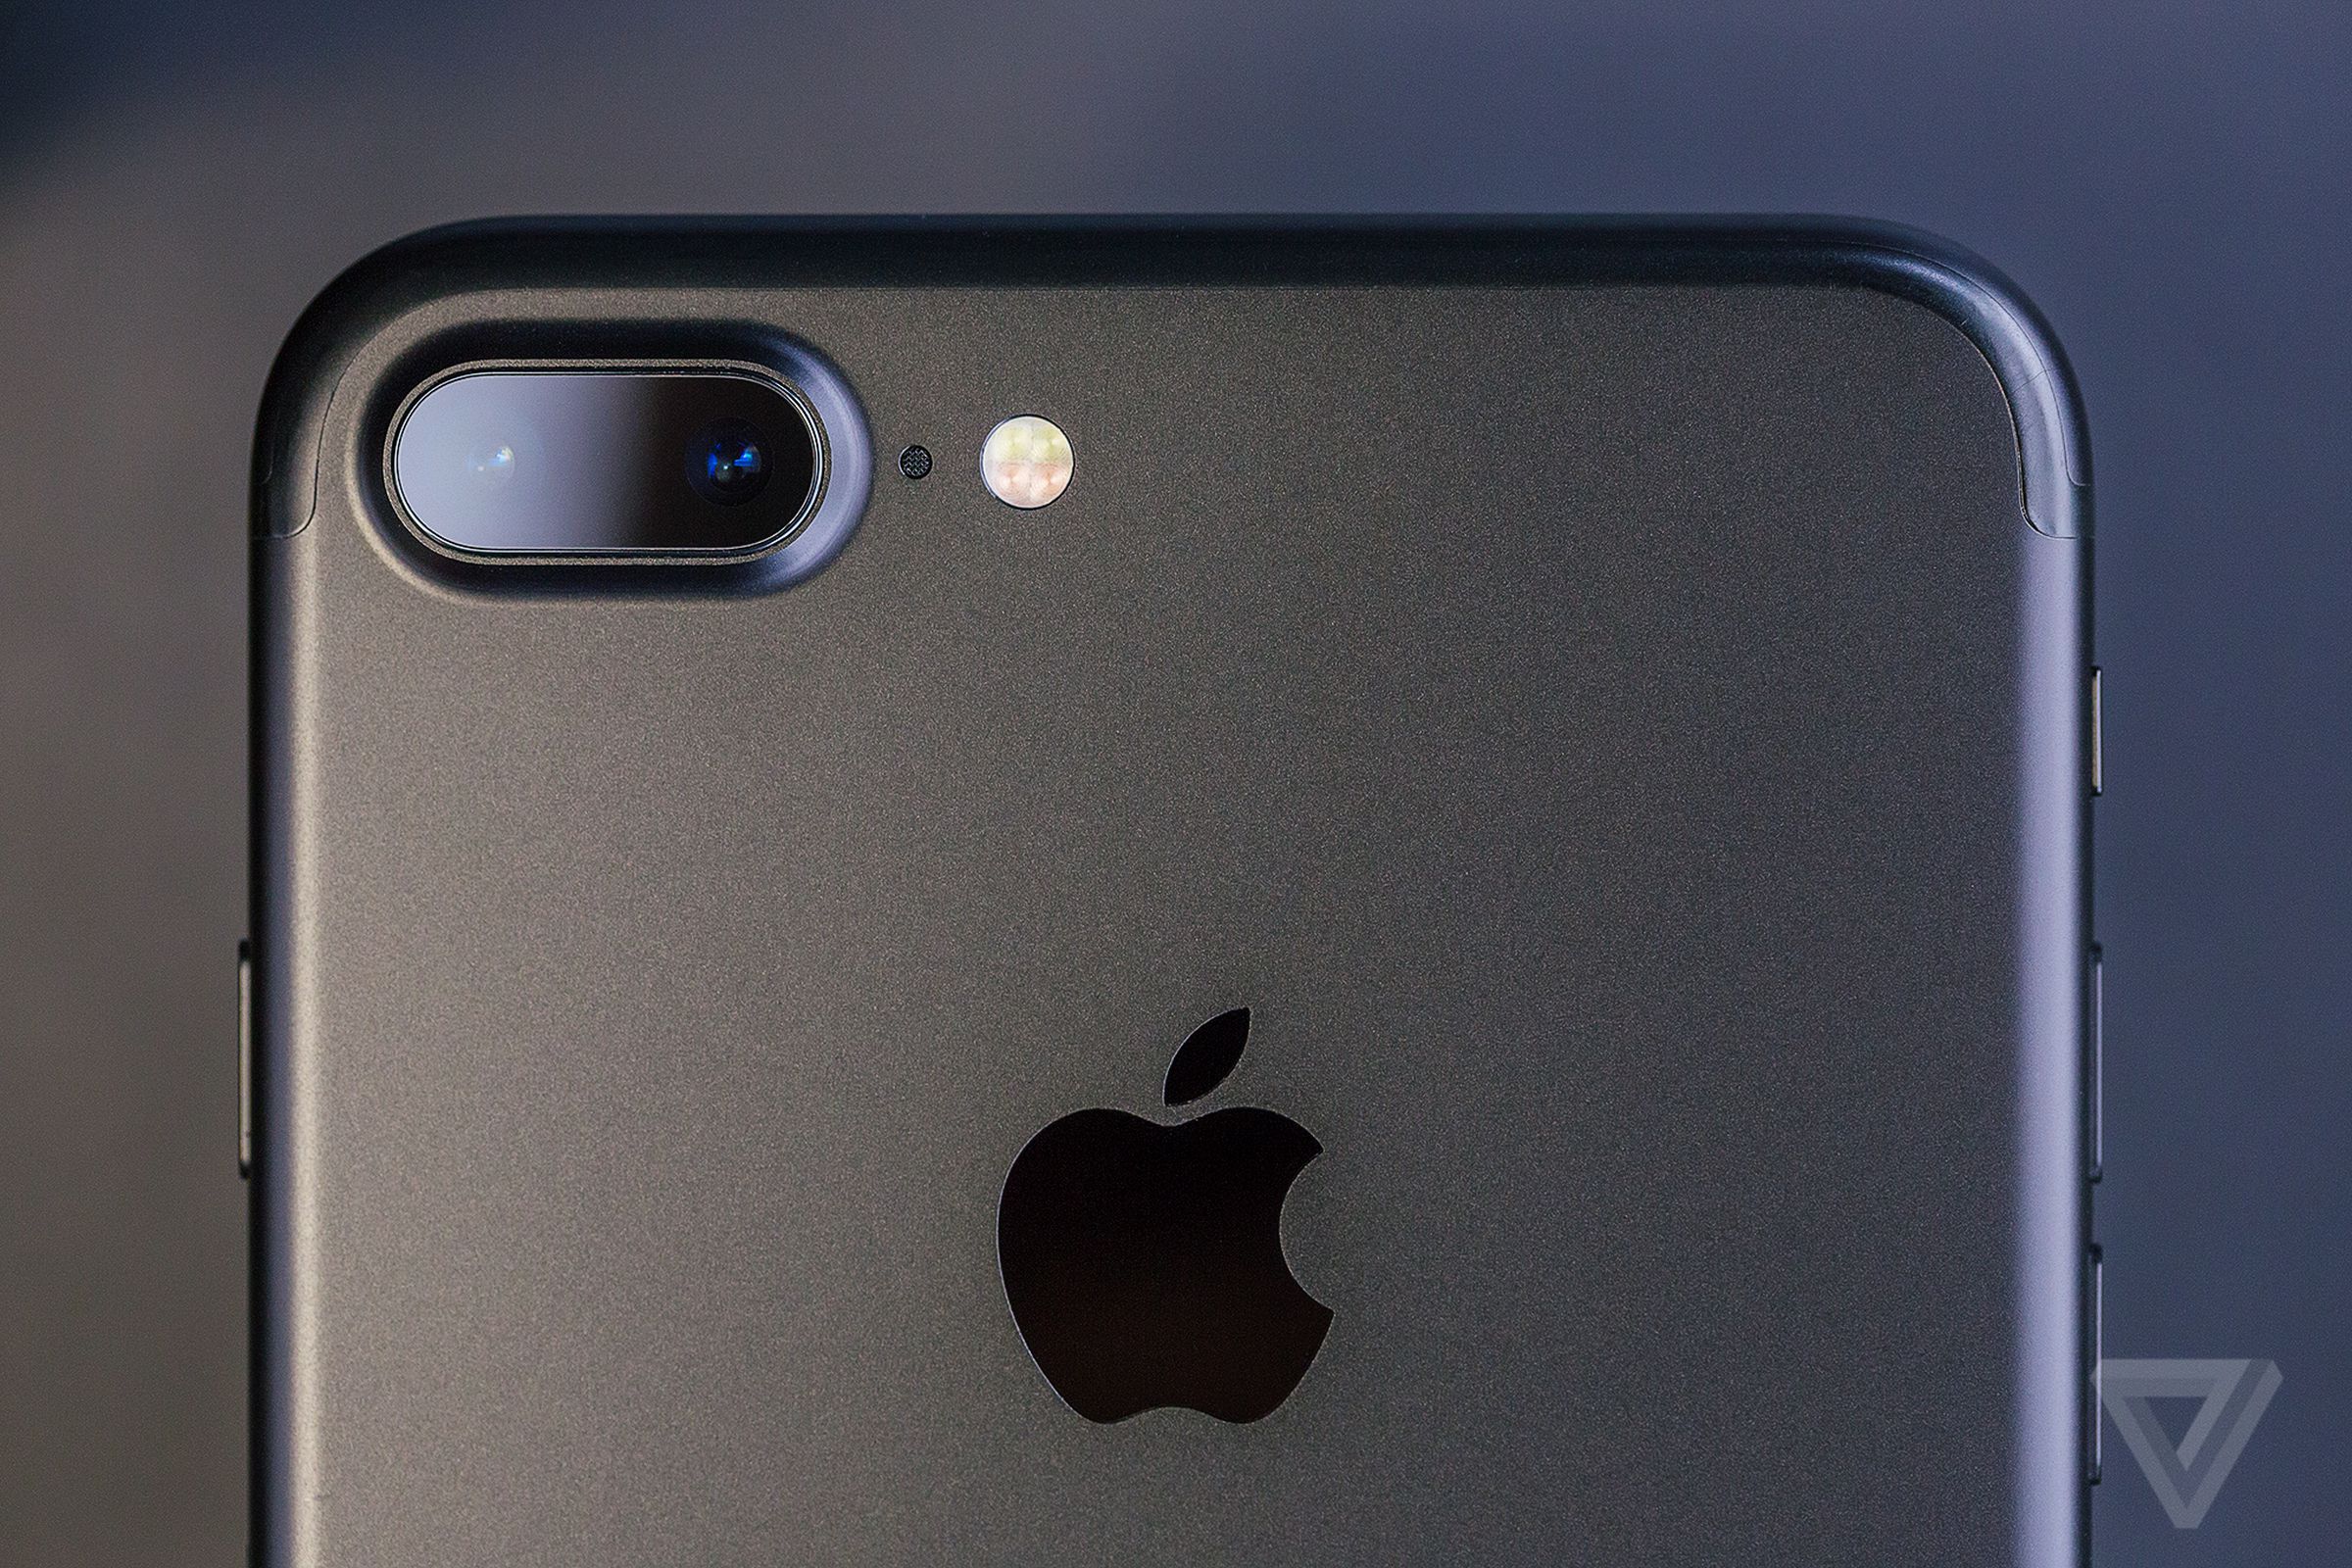 iPhone 7 Plus rear closeup showing two camera module